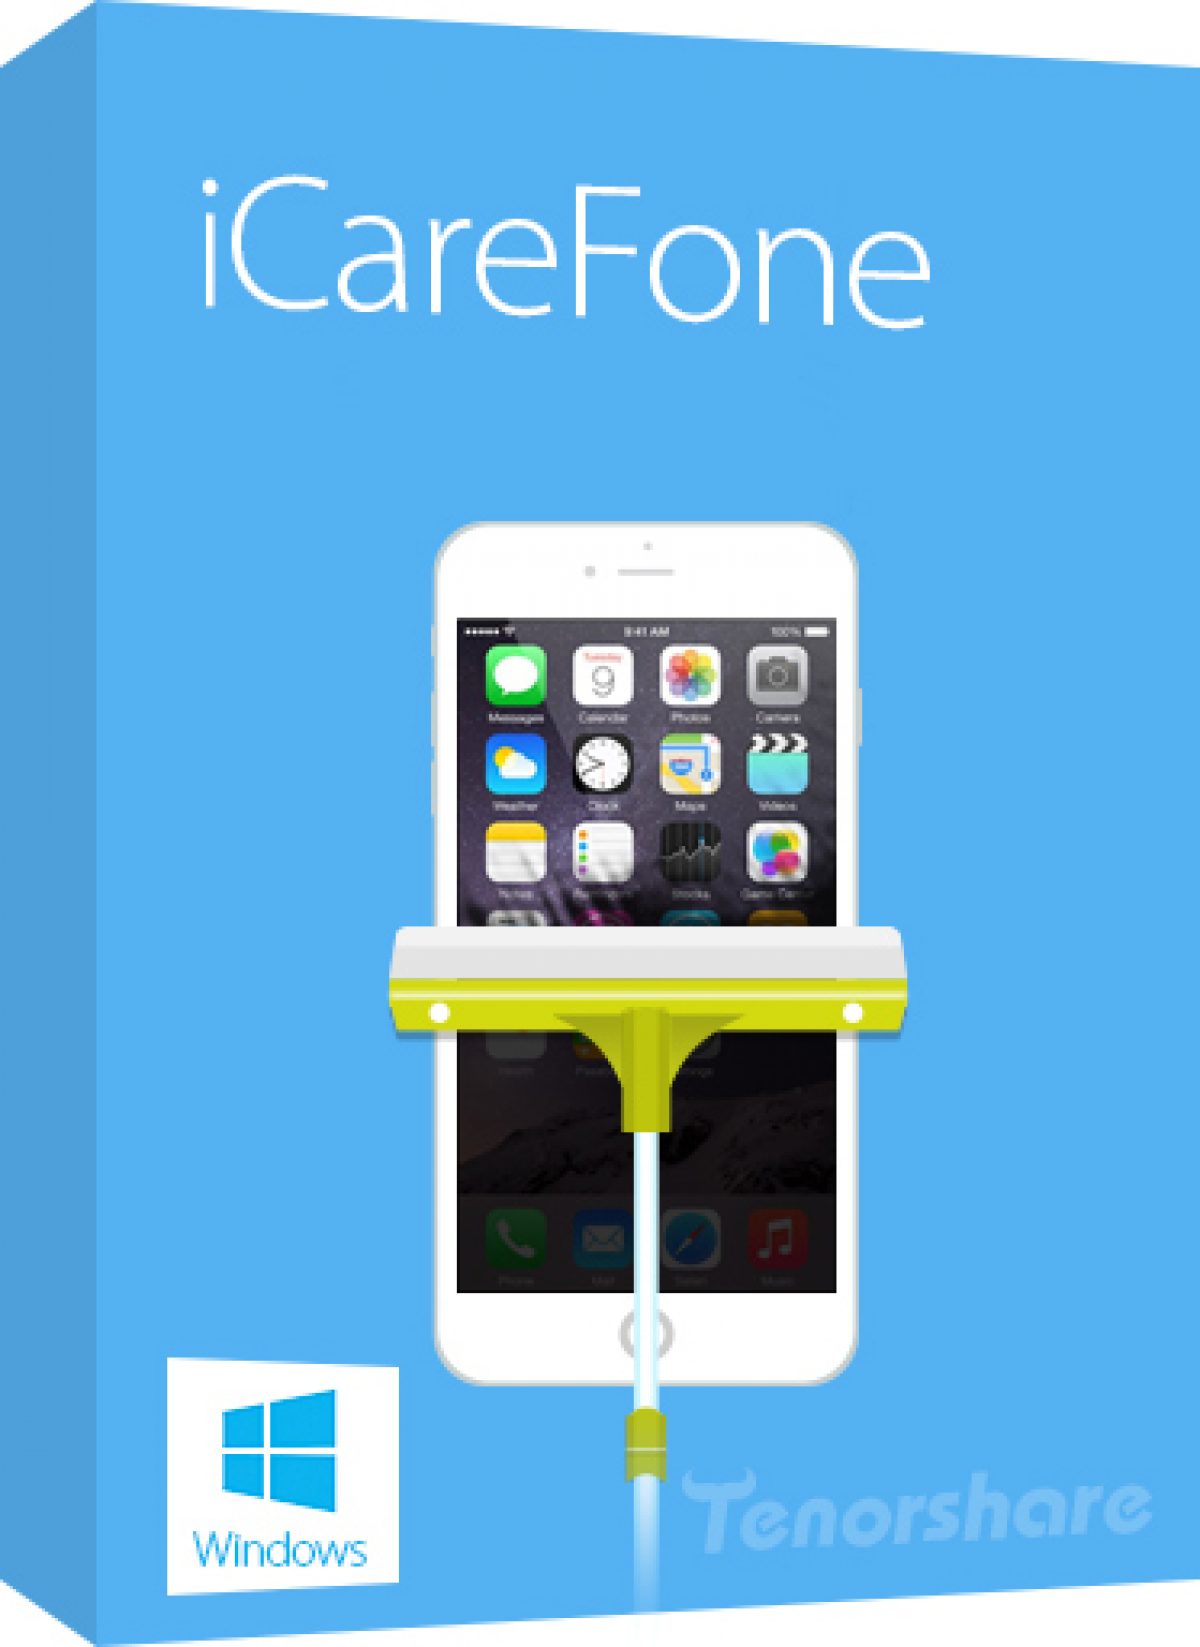 Tenorshare icarefone 4.0 download free full